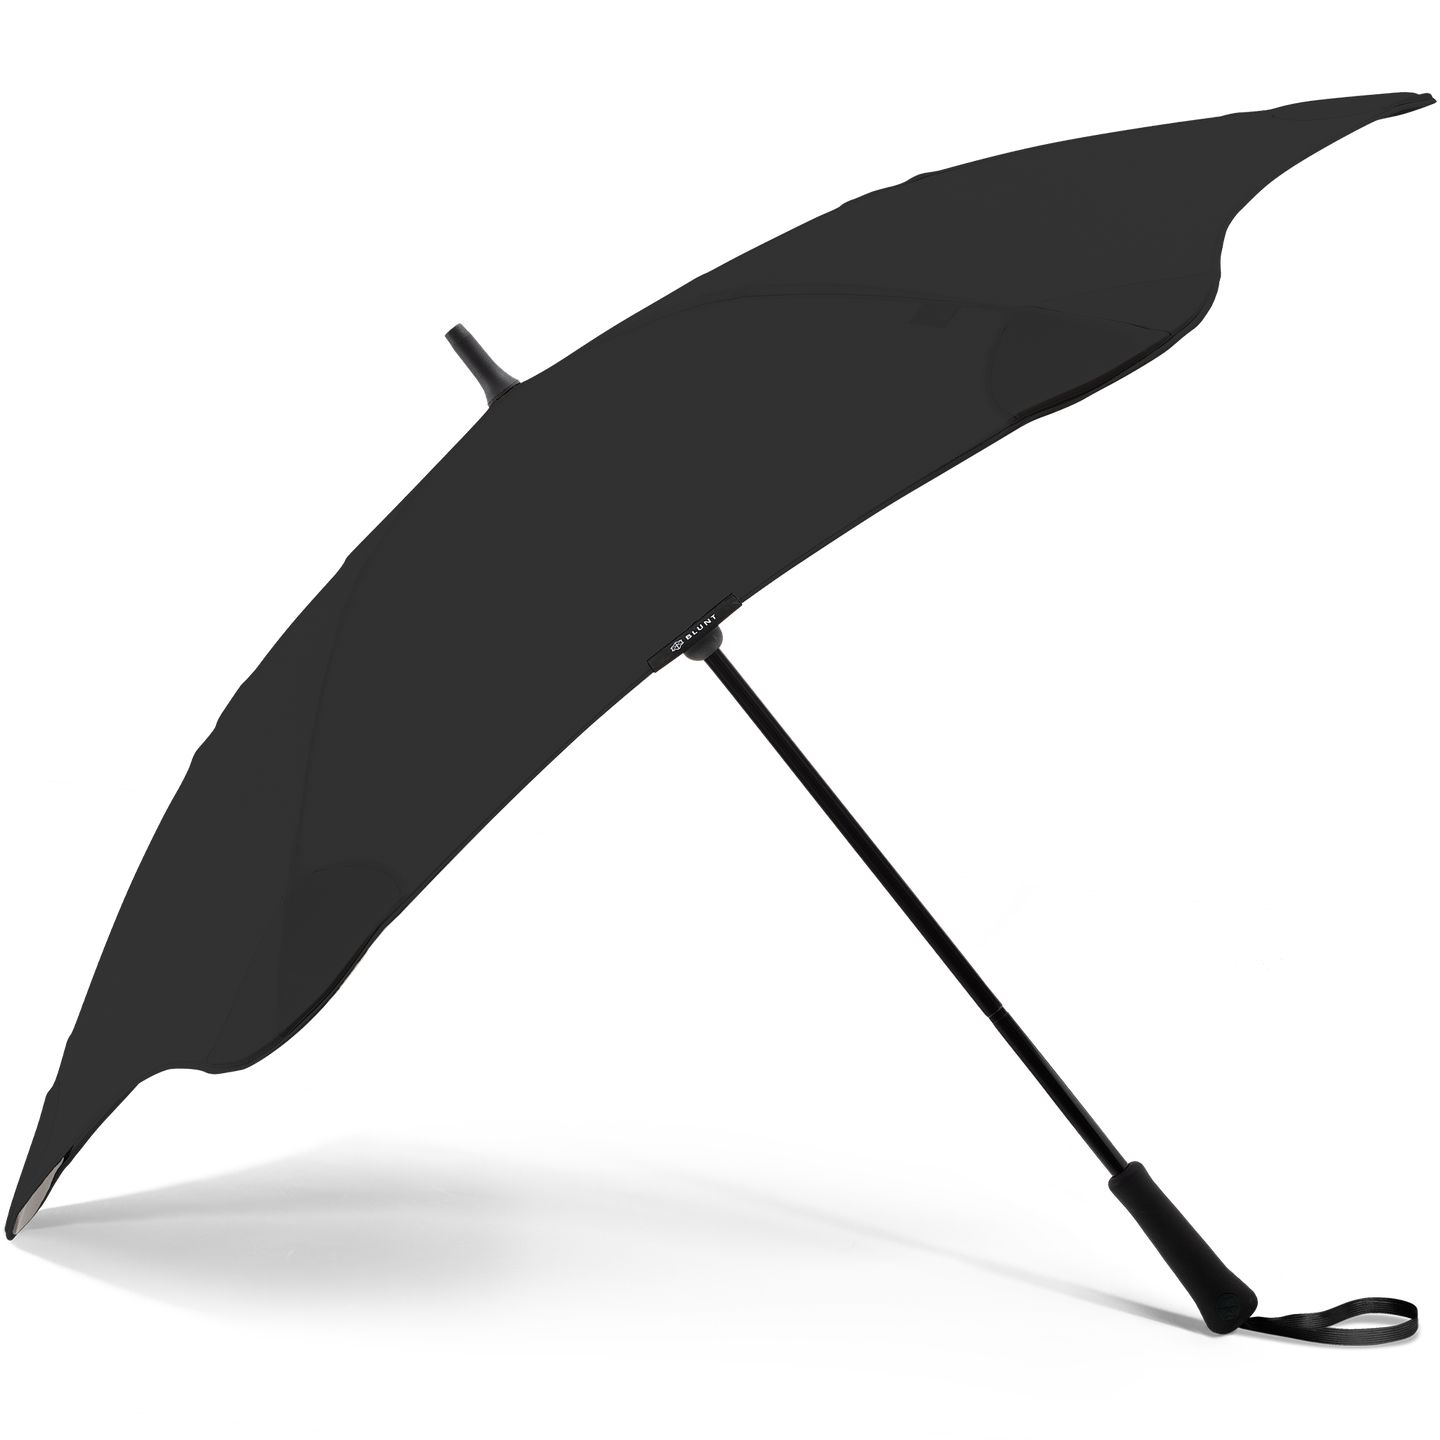 2020 Classic Black Blunt Umbrella Side View